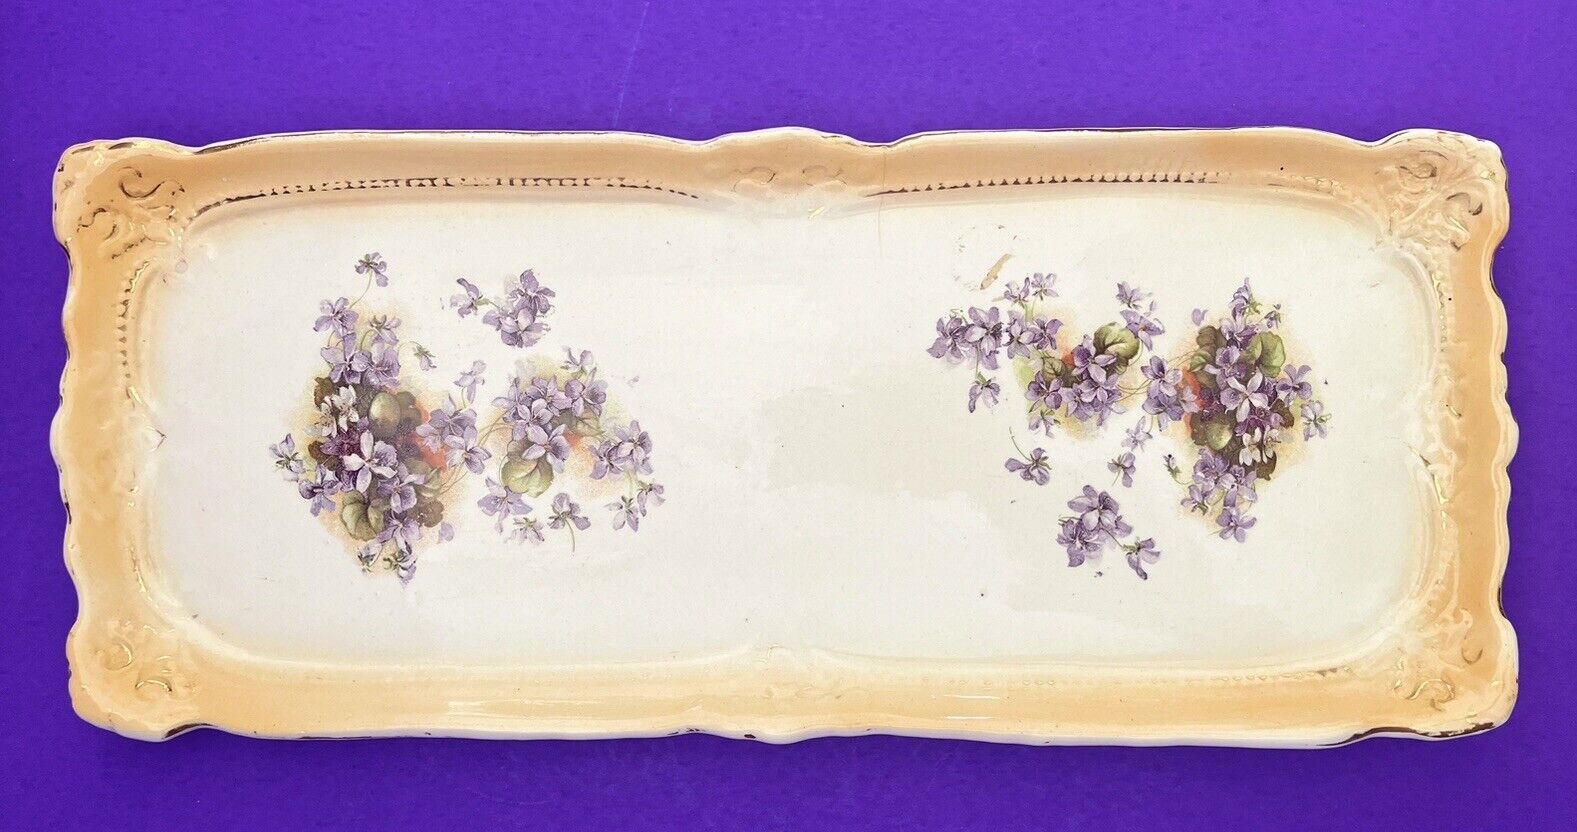 VTG Large Porcelain Vanity Tray w/ Purple Violets and Yellow Trim 18”x7”SALE